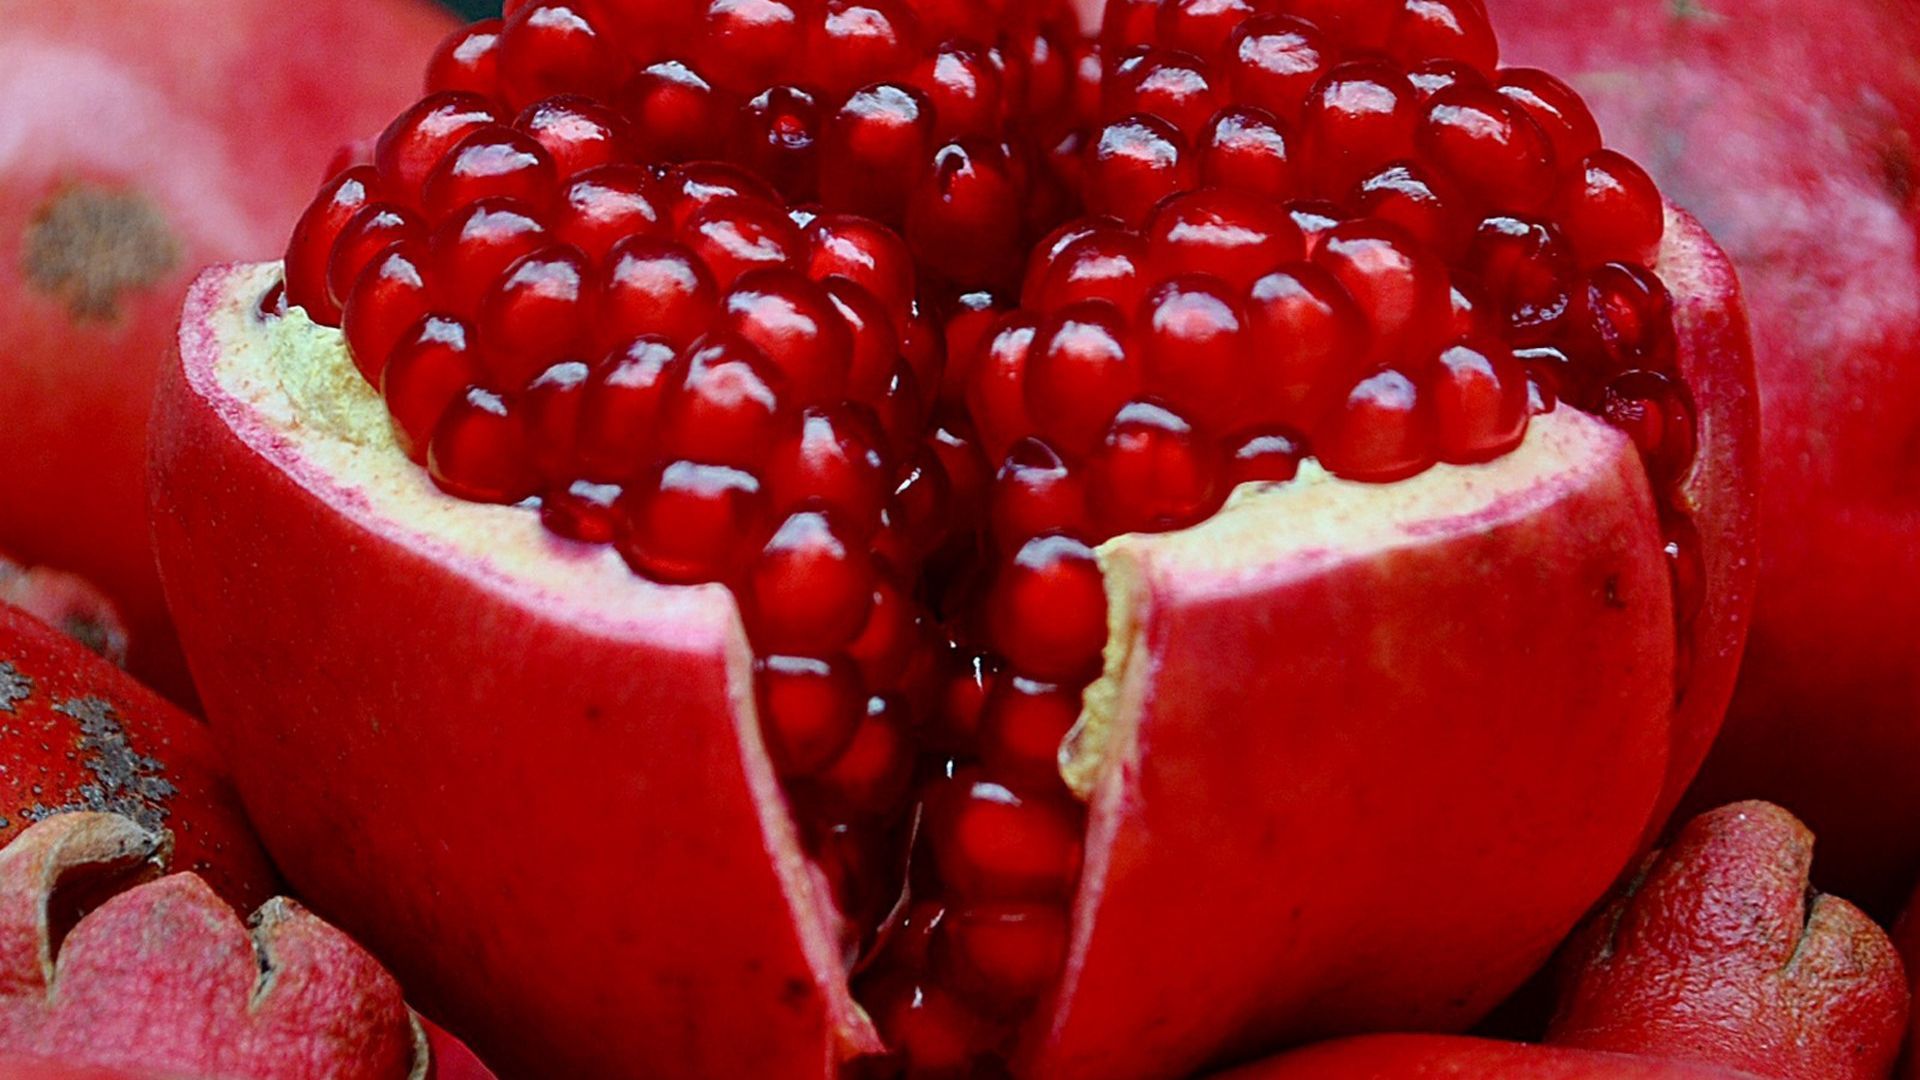 Download wallpaper 1920x1080 pomegranate, fruit, slice full hd, hdtv, fhd, 1080p HD background